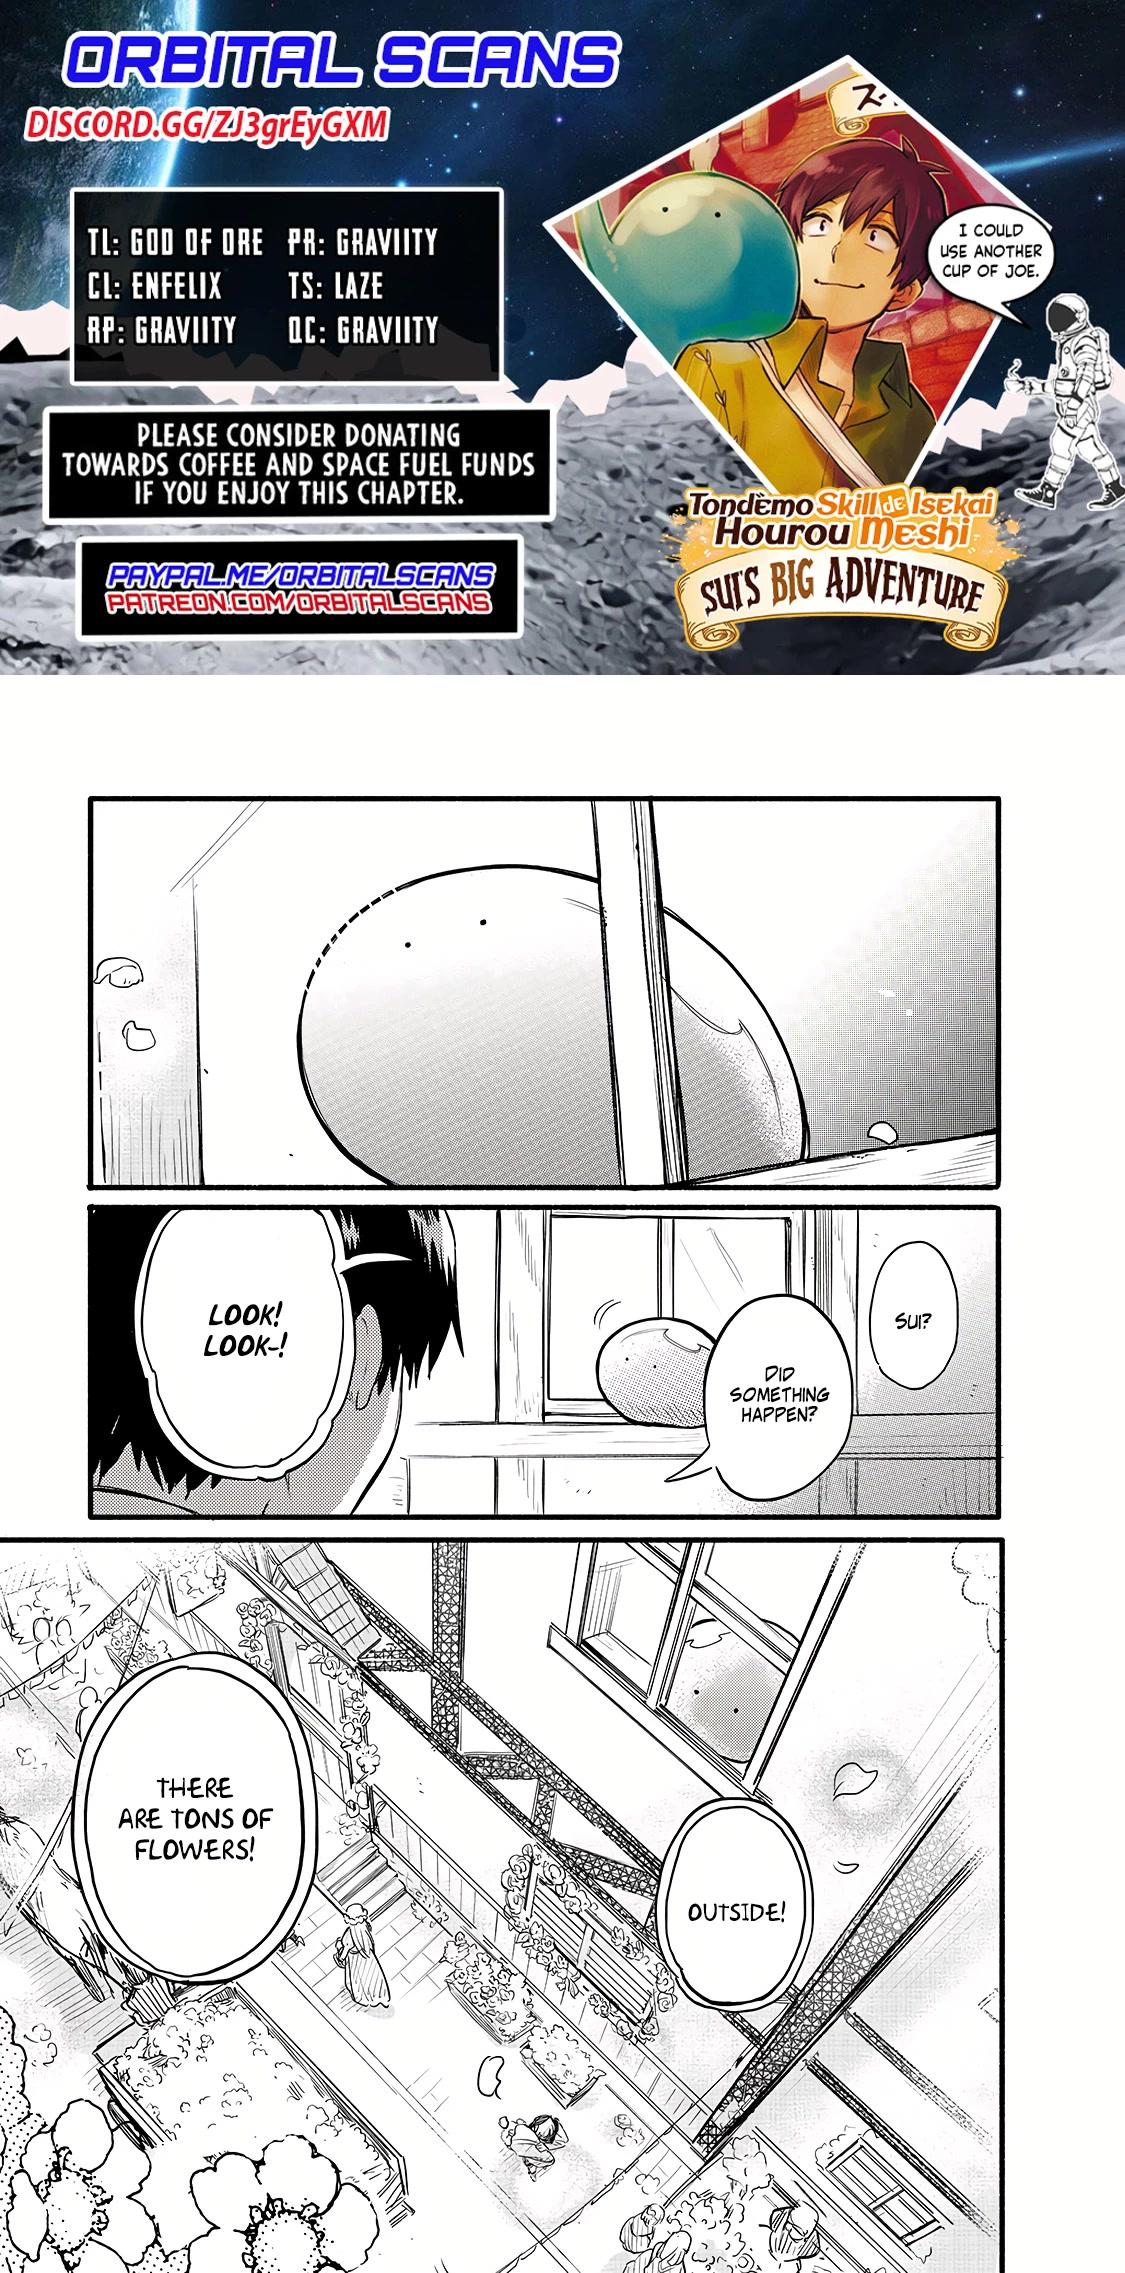 Read Manga Tondemo Skill de Isekai Hourou Meshi: Sui no Daibouken - Chapter  42